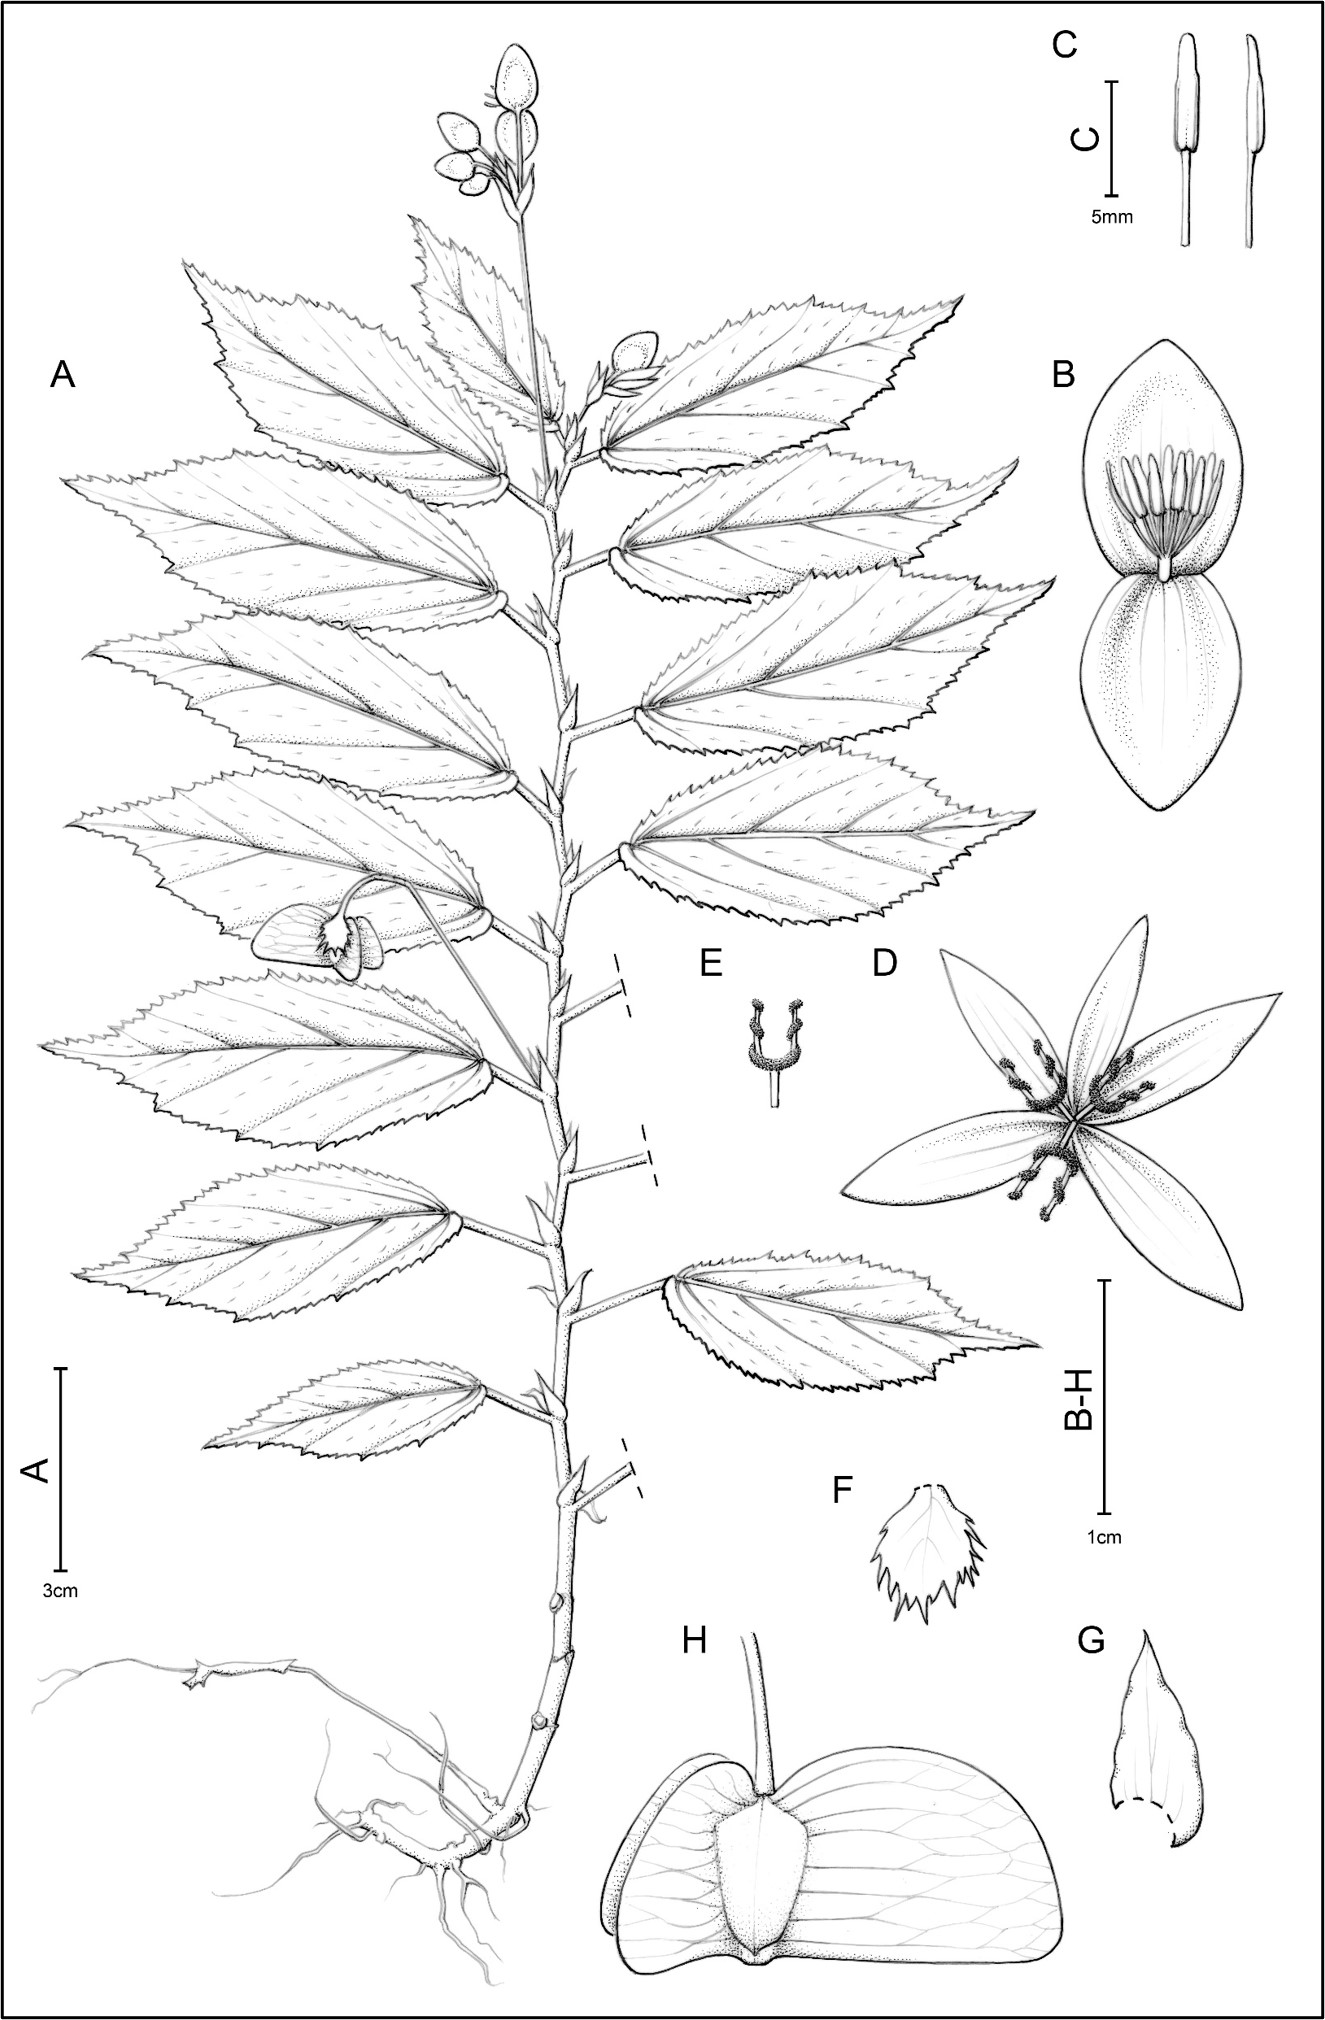 An illustration of Begonia galea